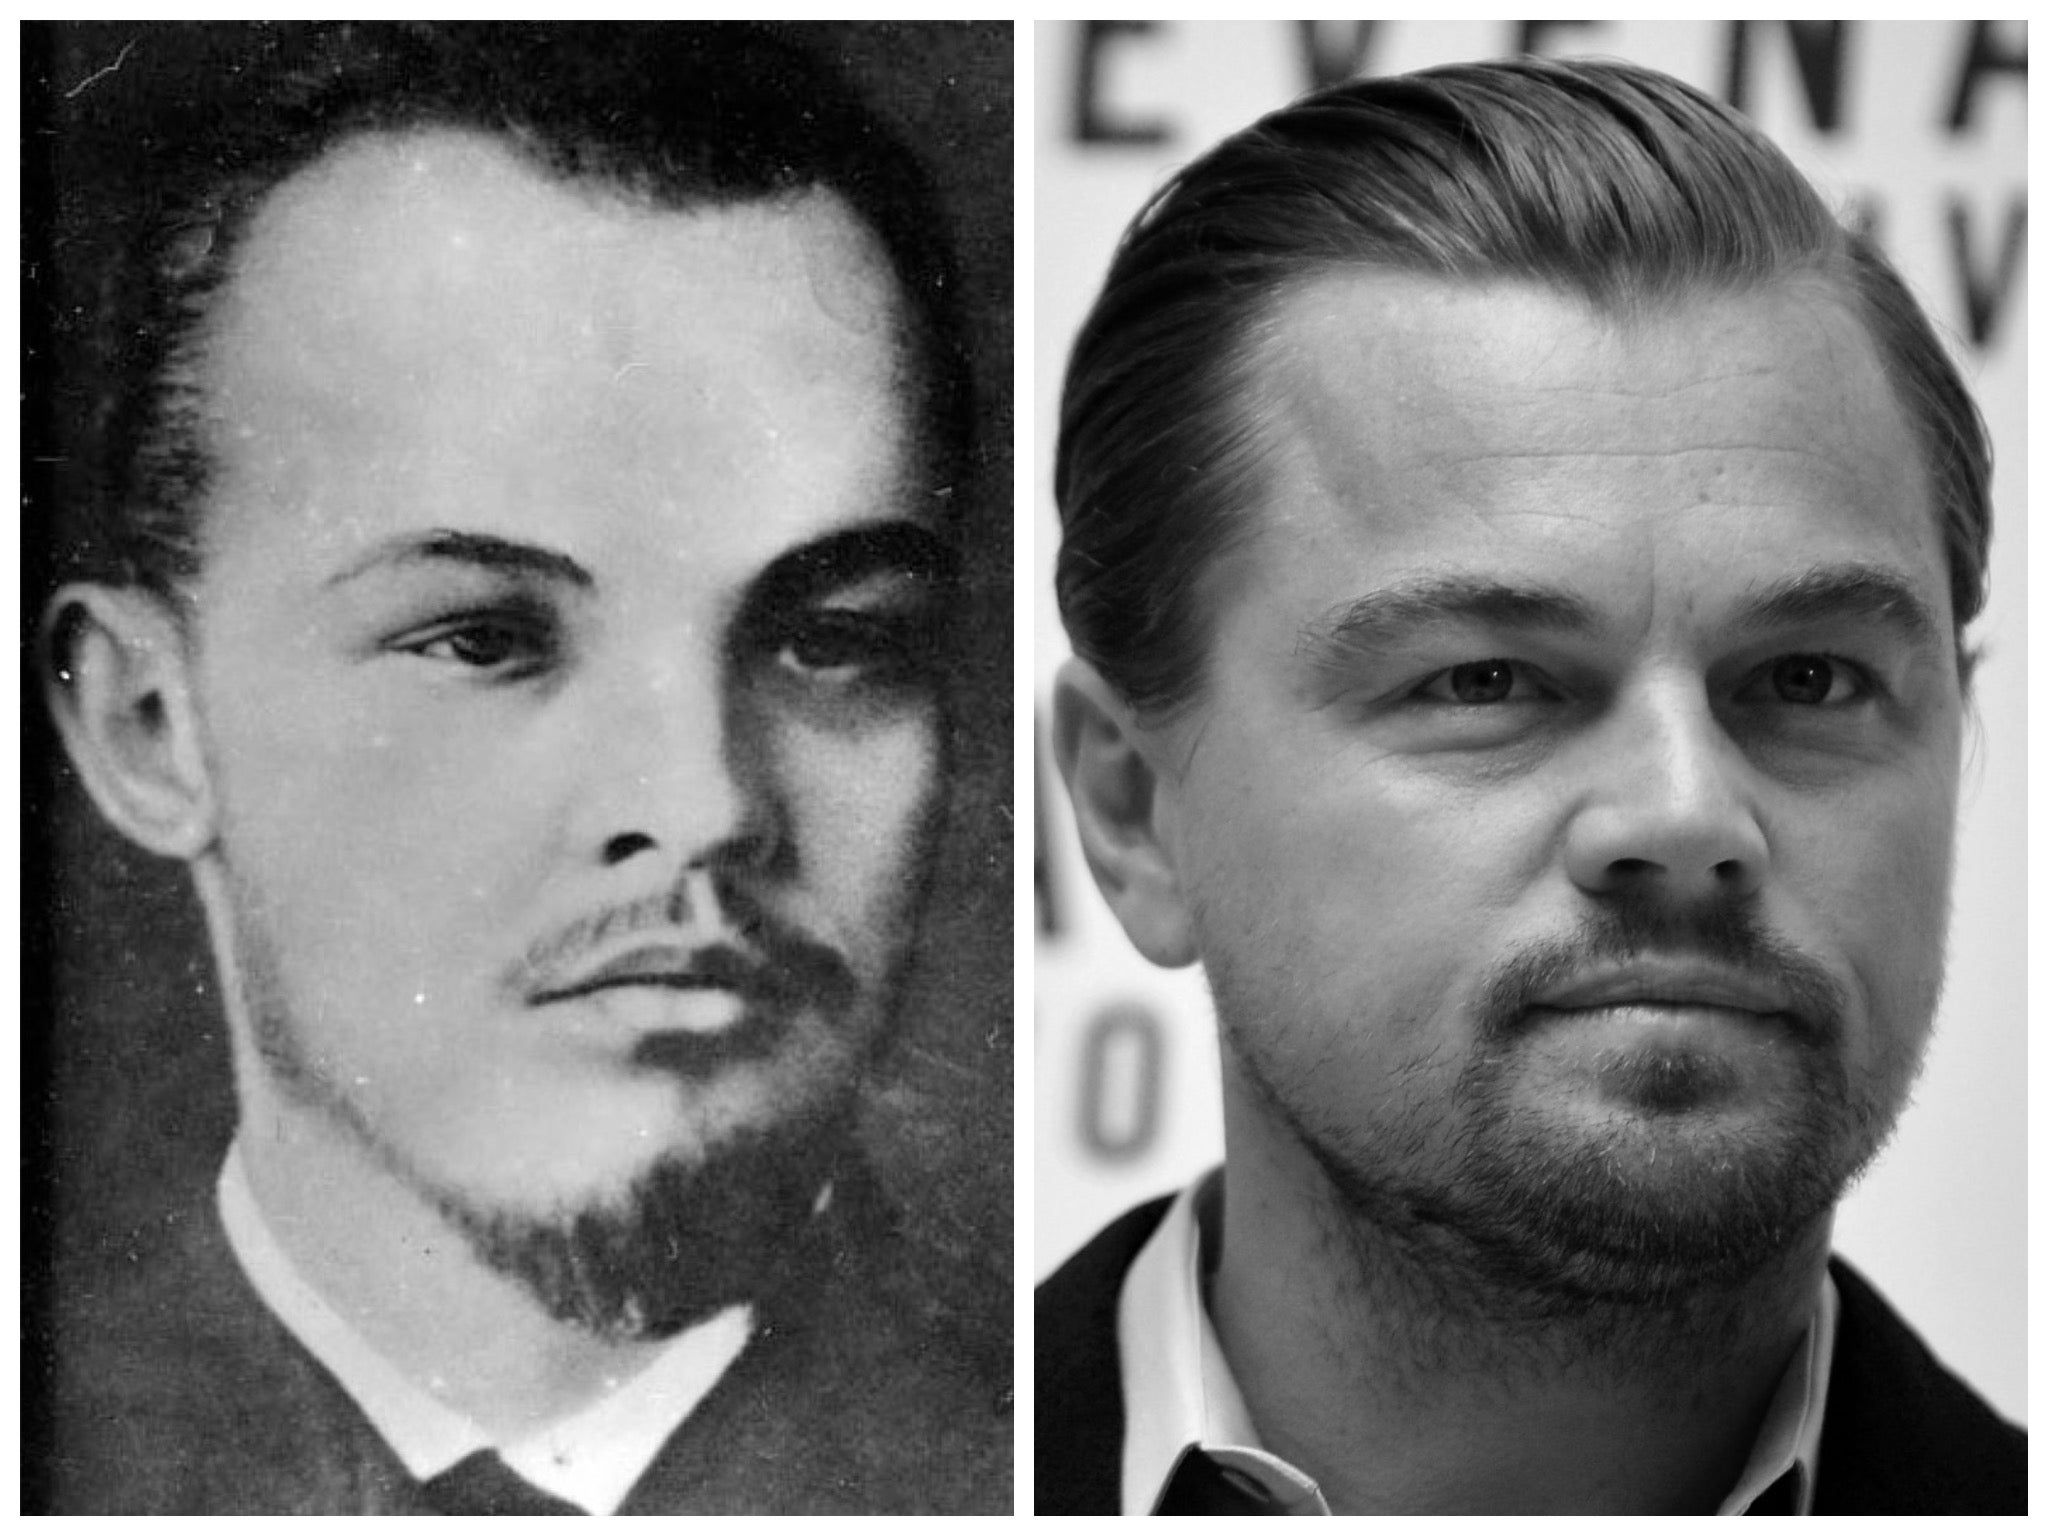 Lenin/Leonardo DiCaprio promoting The Revenant